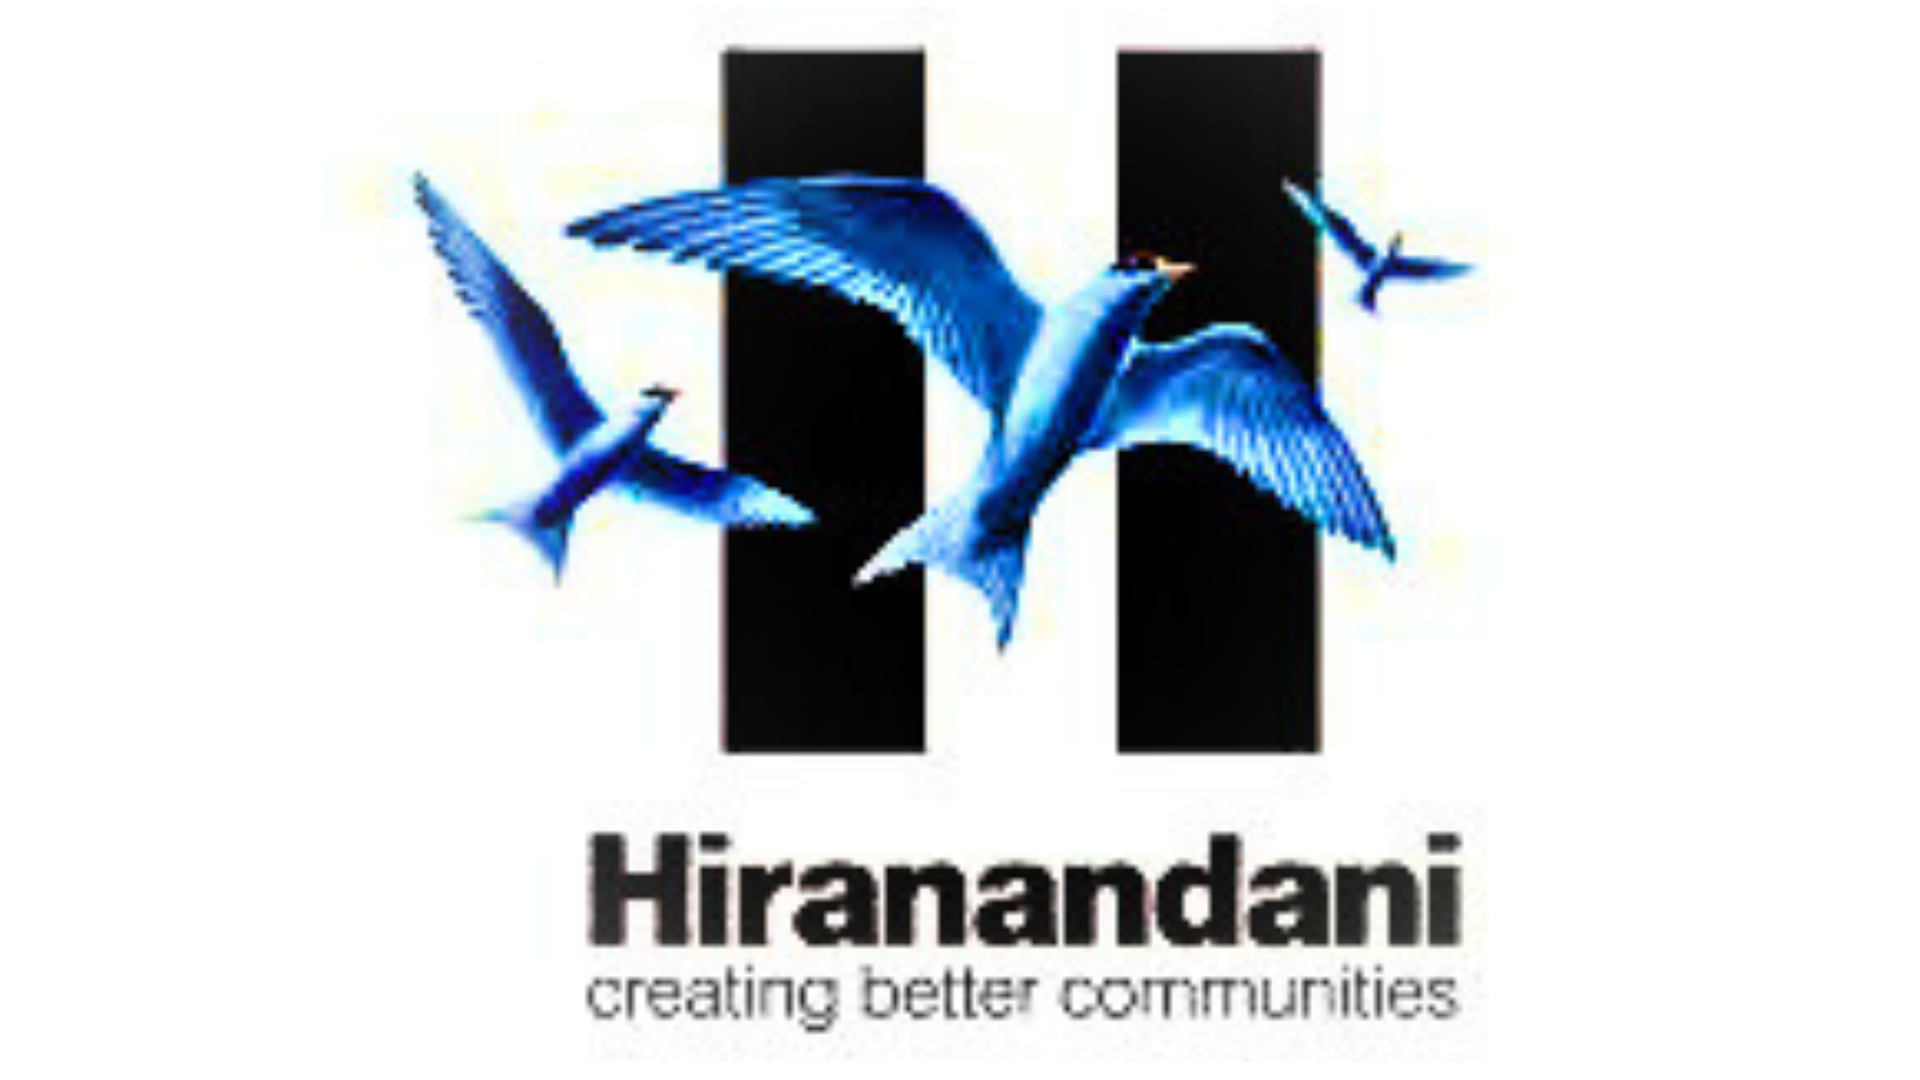 hiranandani group